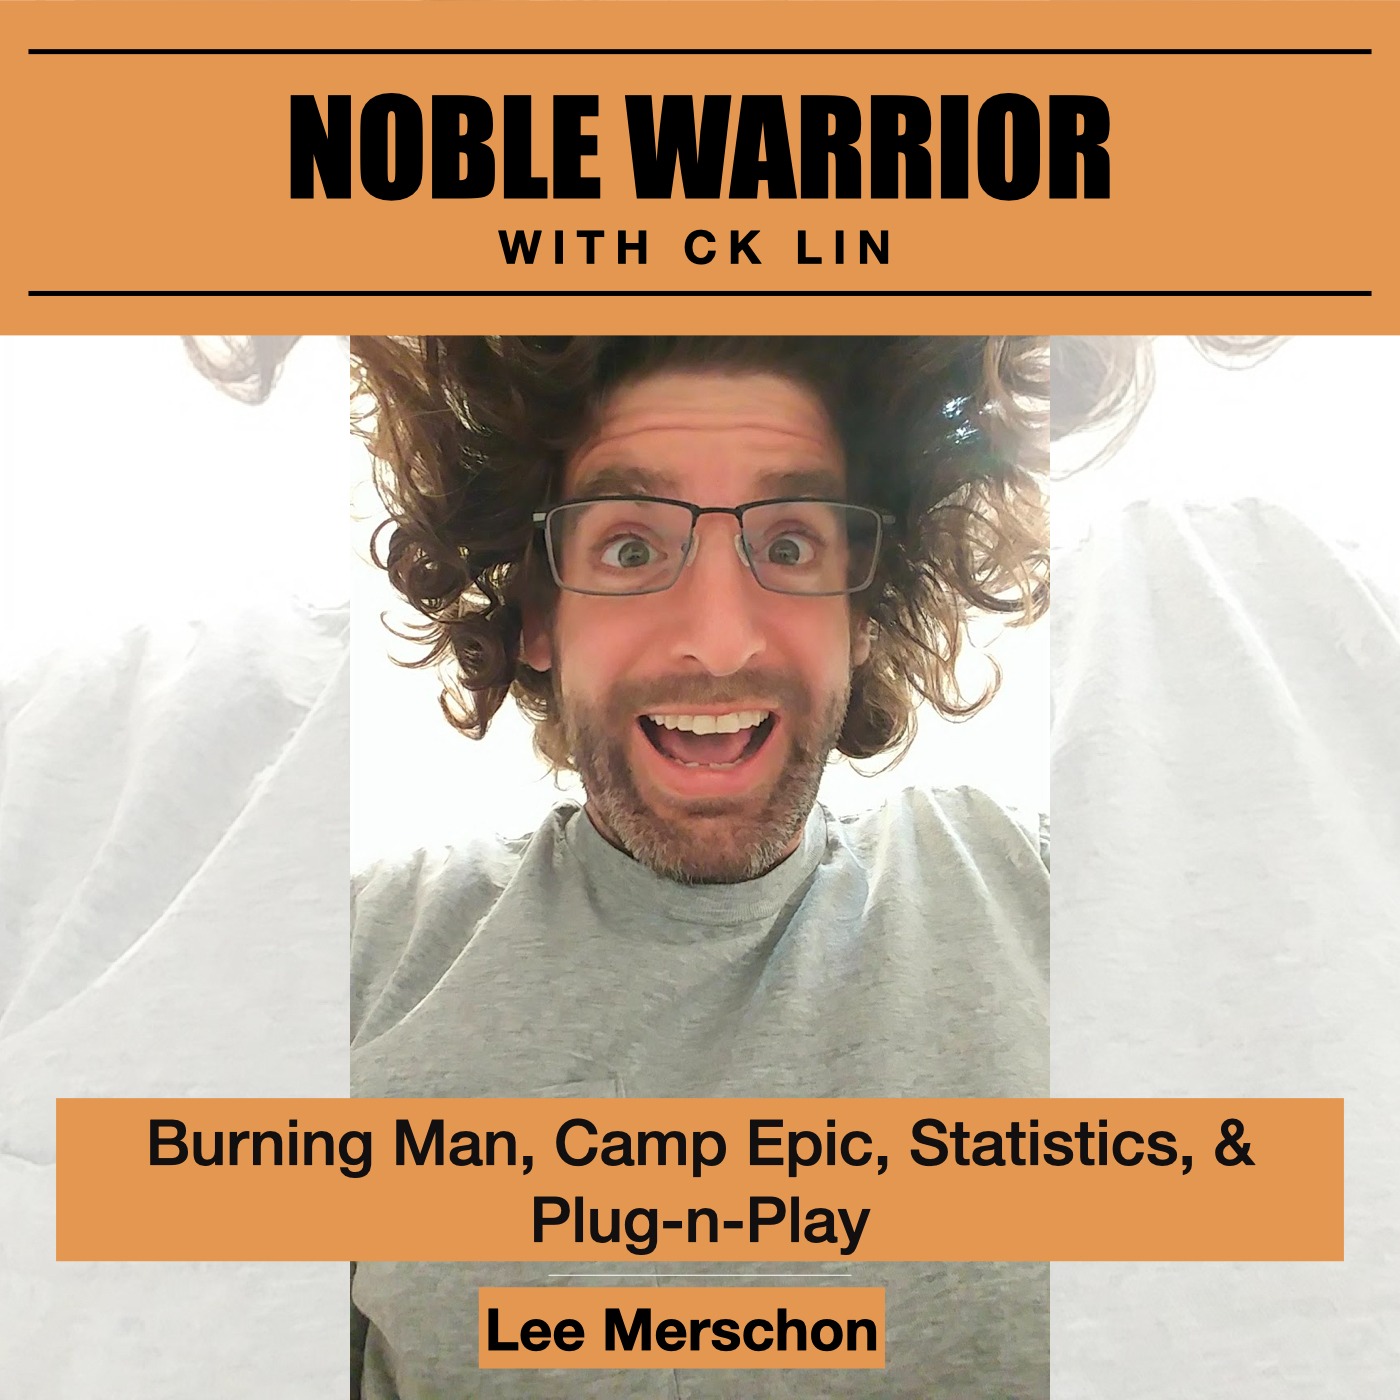 156 Lee Merschon: Burning Man, Camp Epic, Statistics, & Plug-n-Play Image